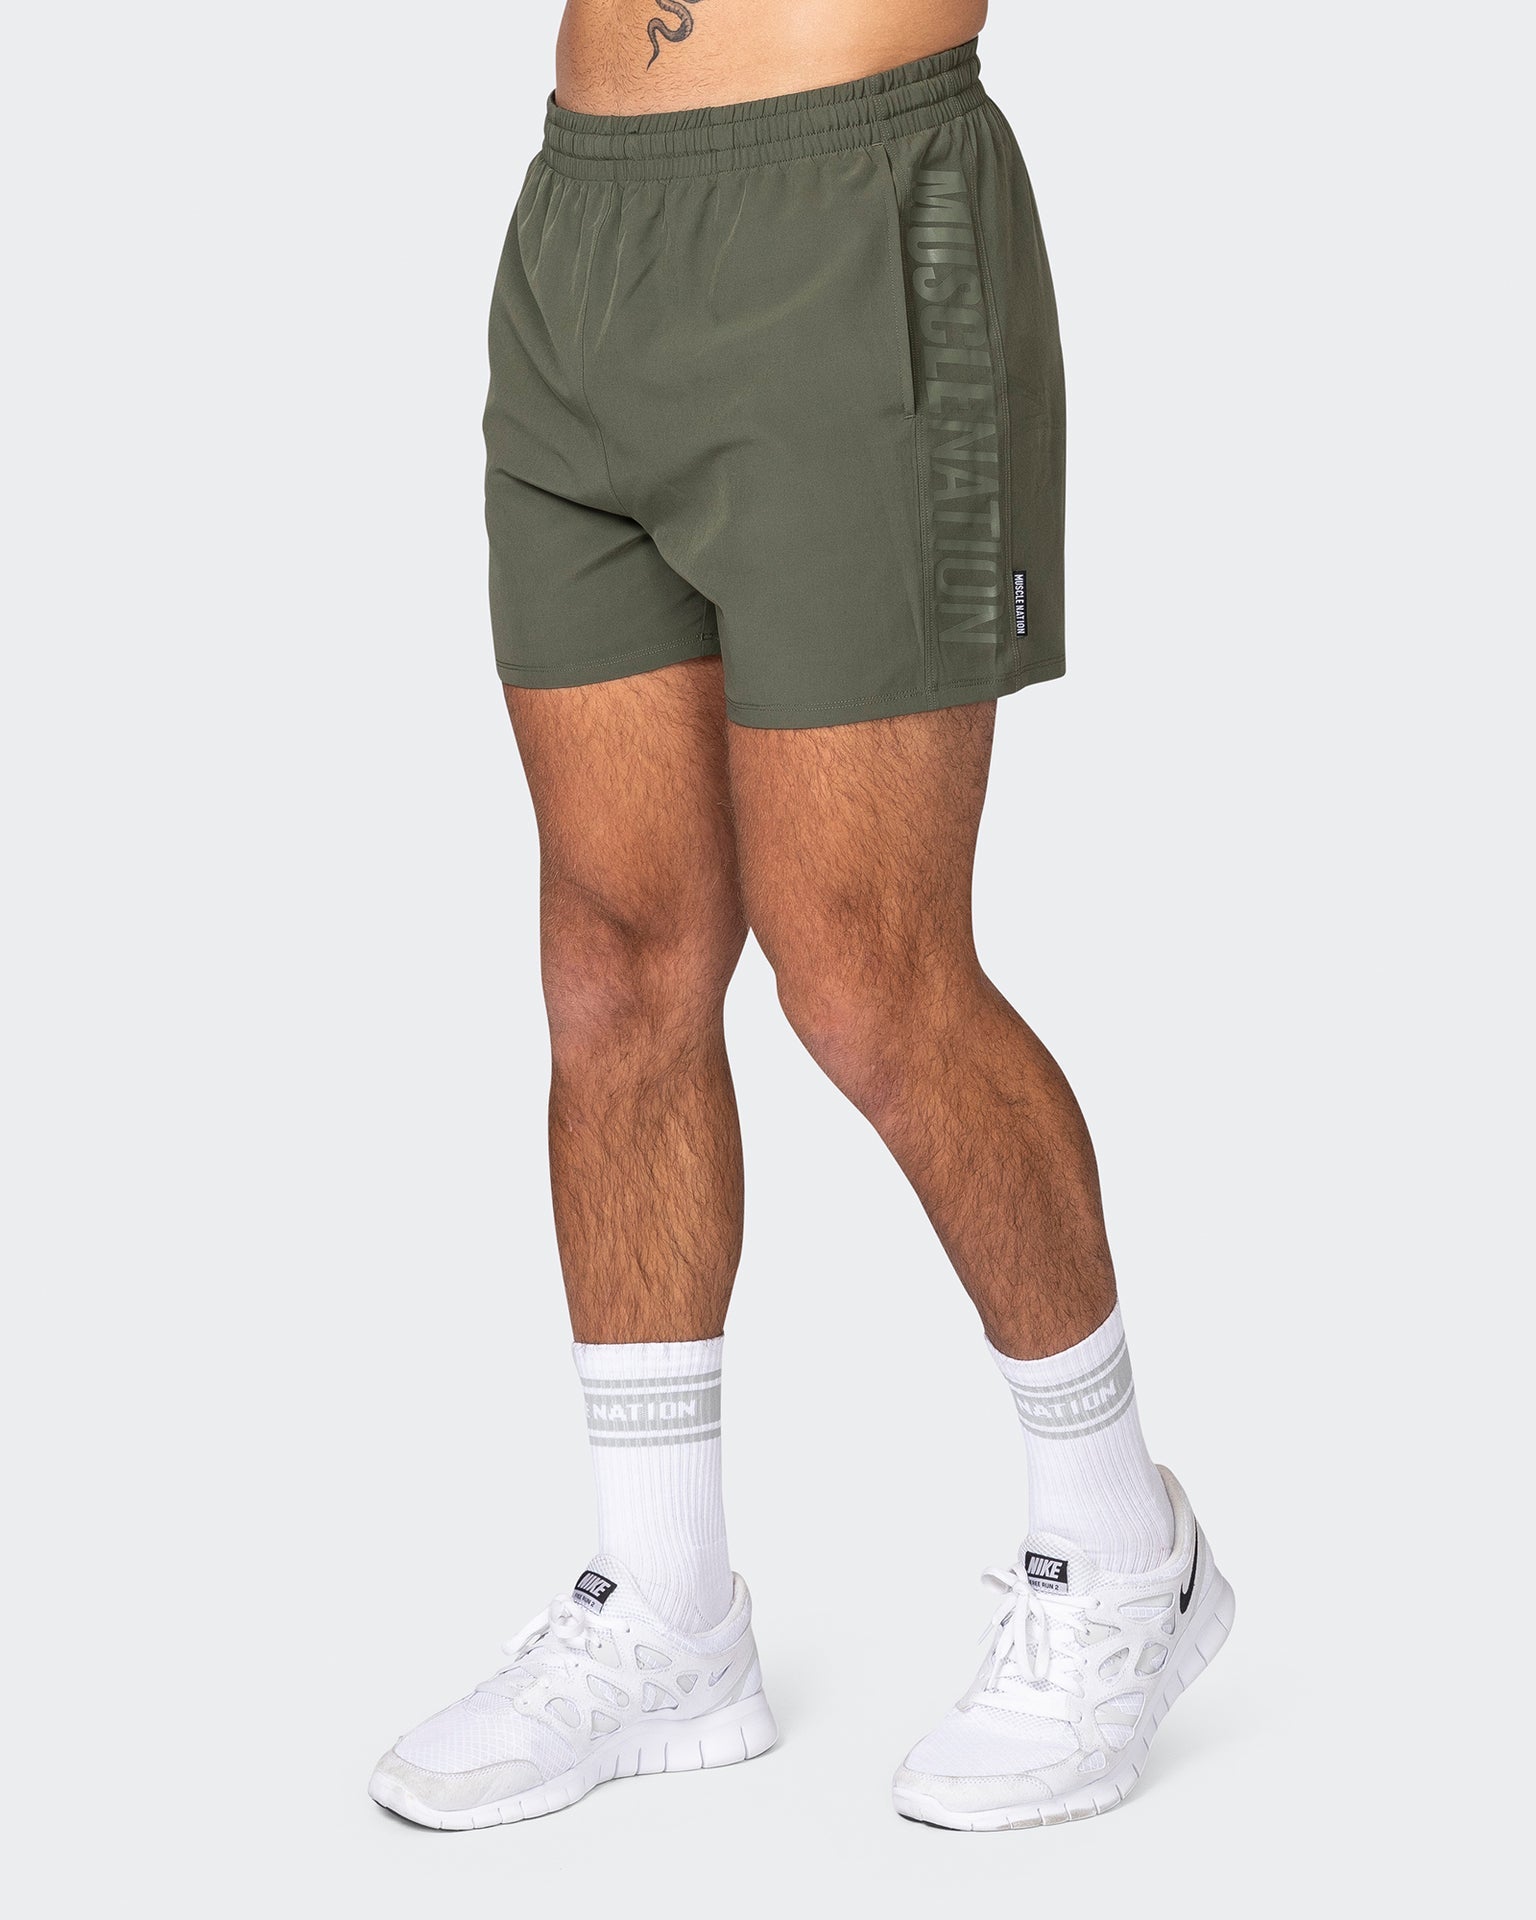 musclenation Gym Shorts Function 4" Shorts - Dark Khaki